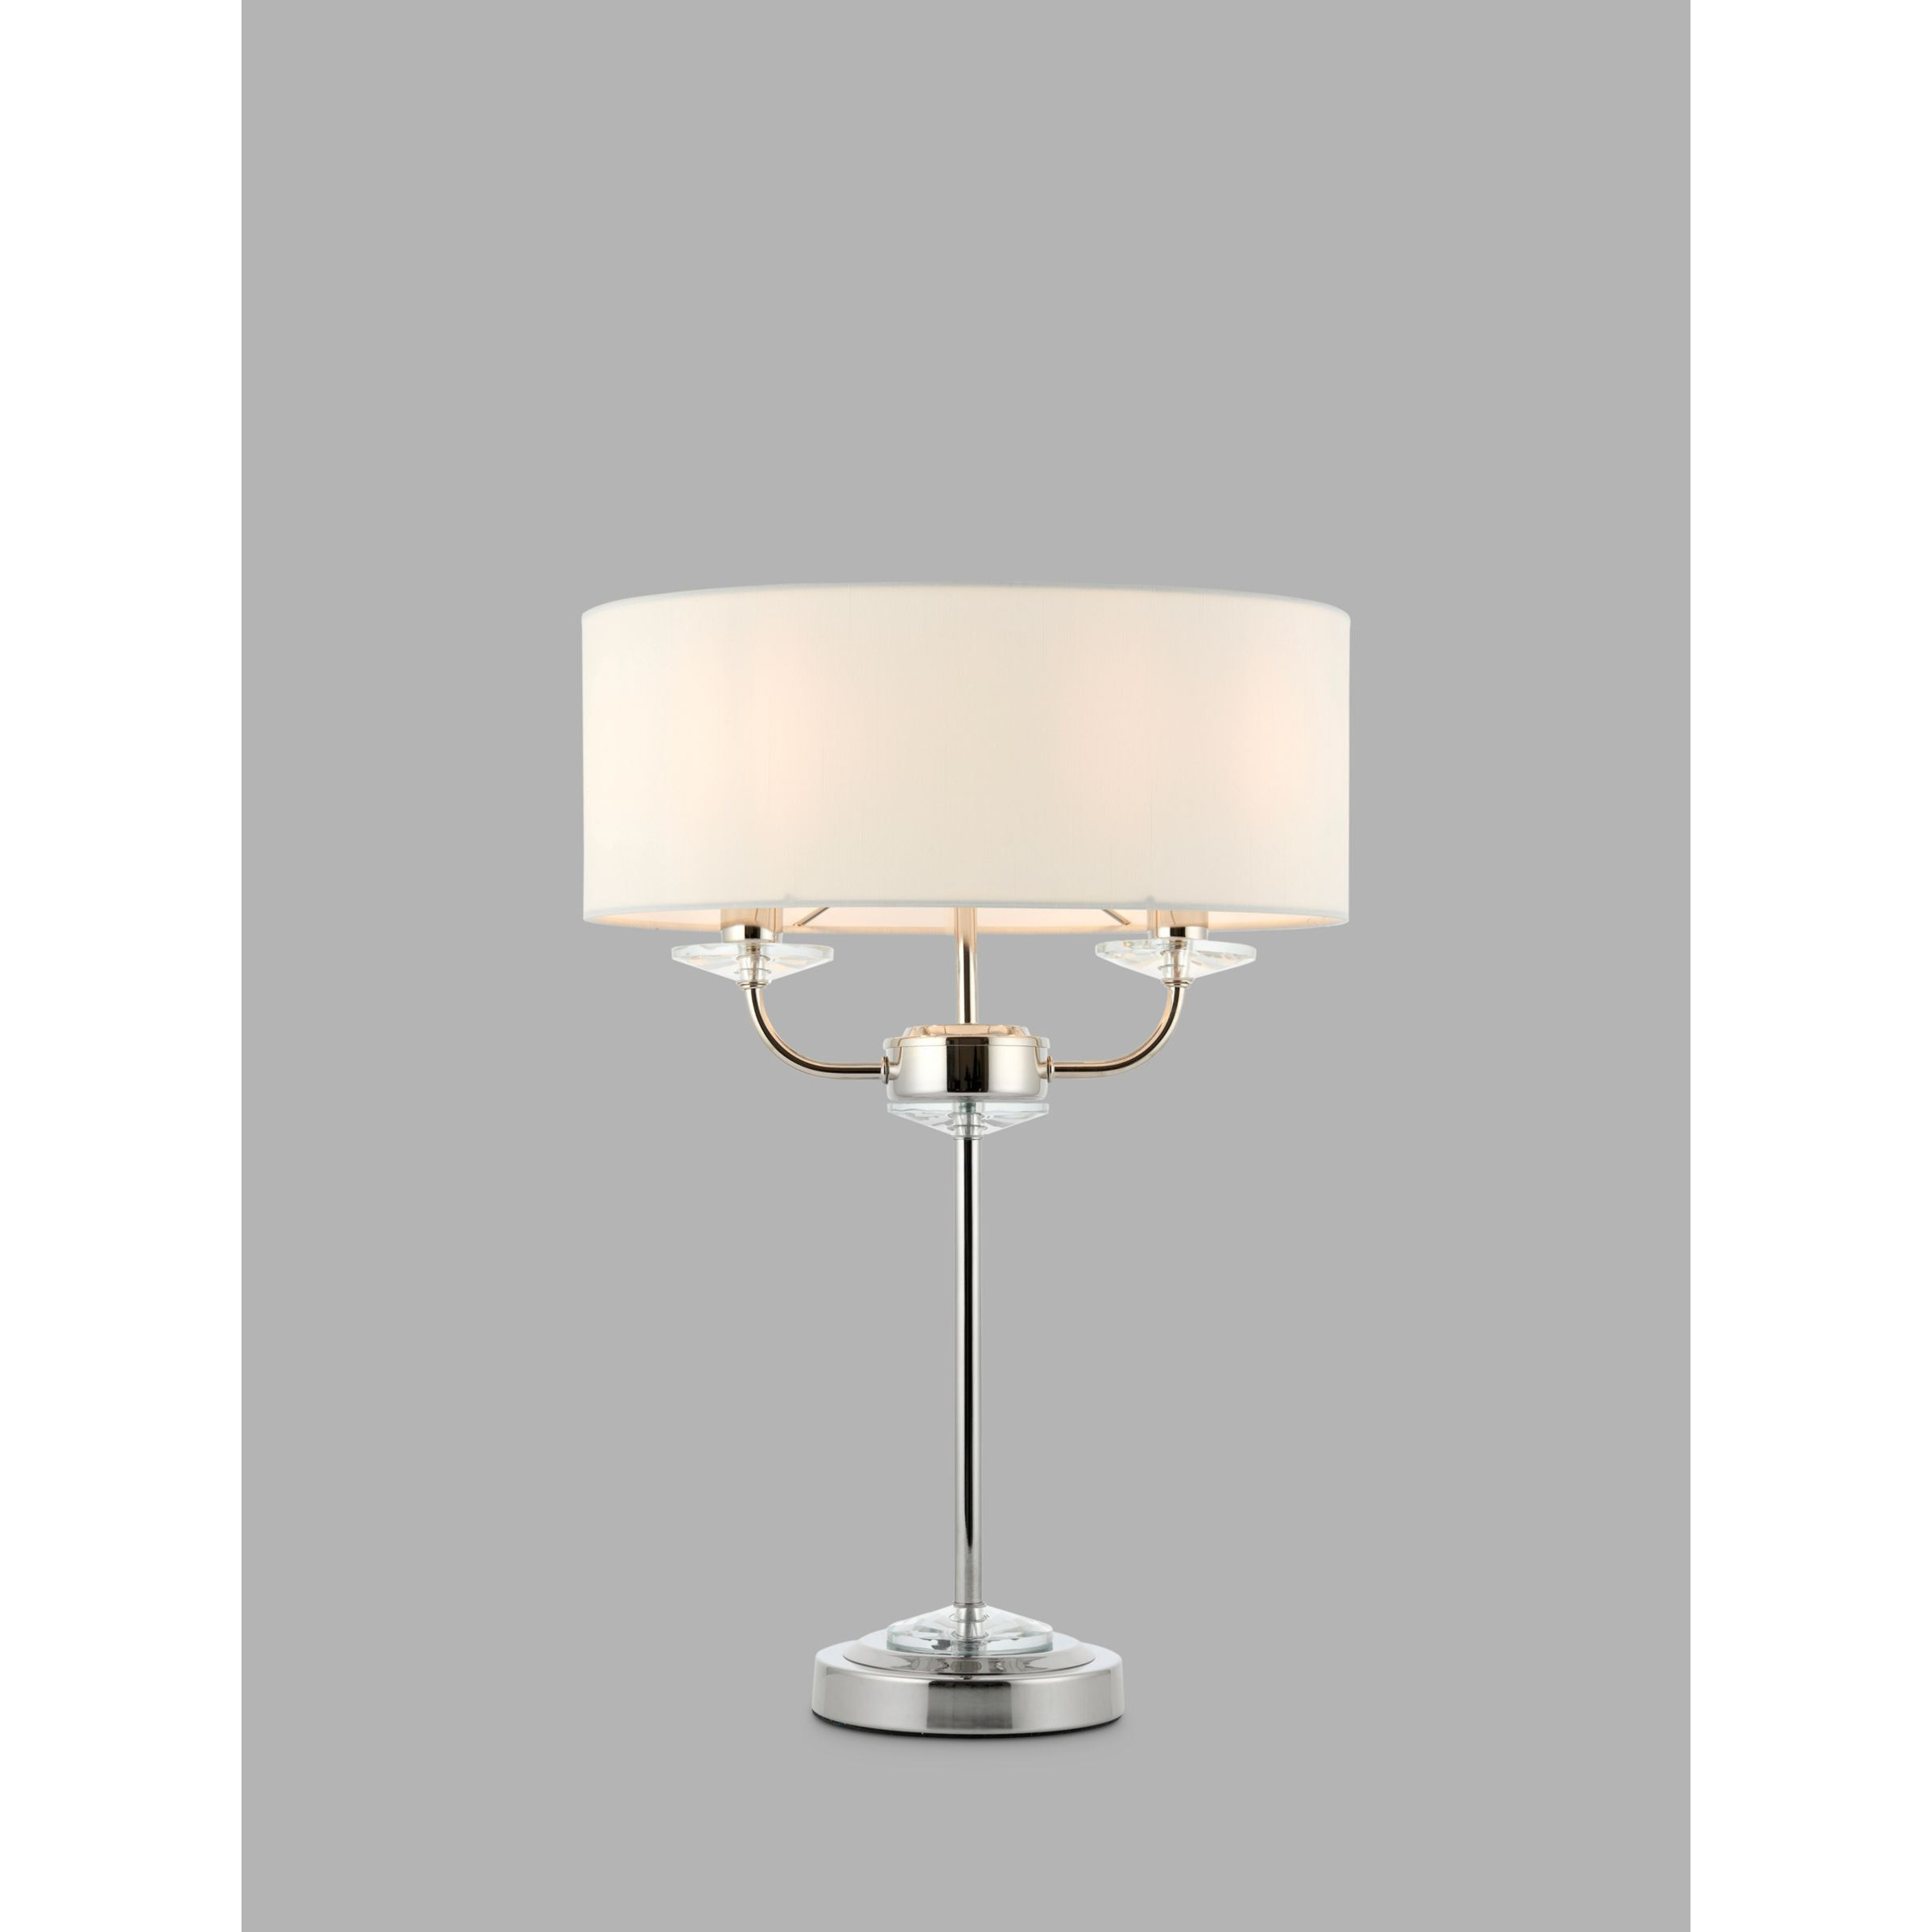 Bay Lighting Hailey Table Lamp, Silver - image 1